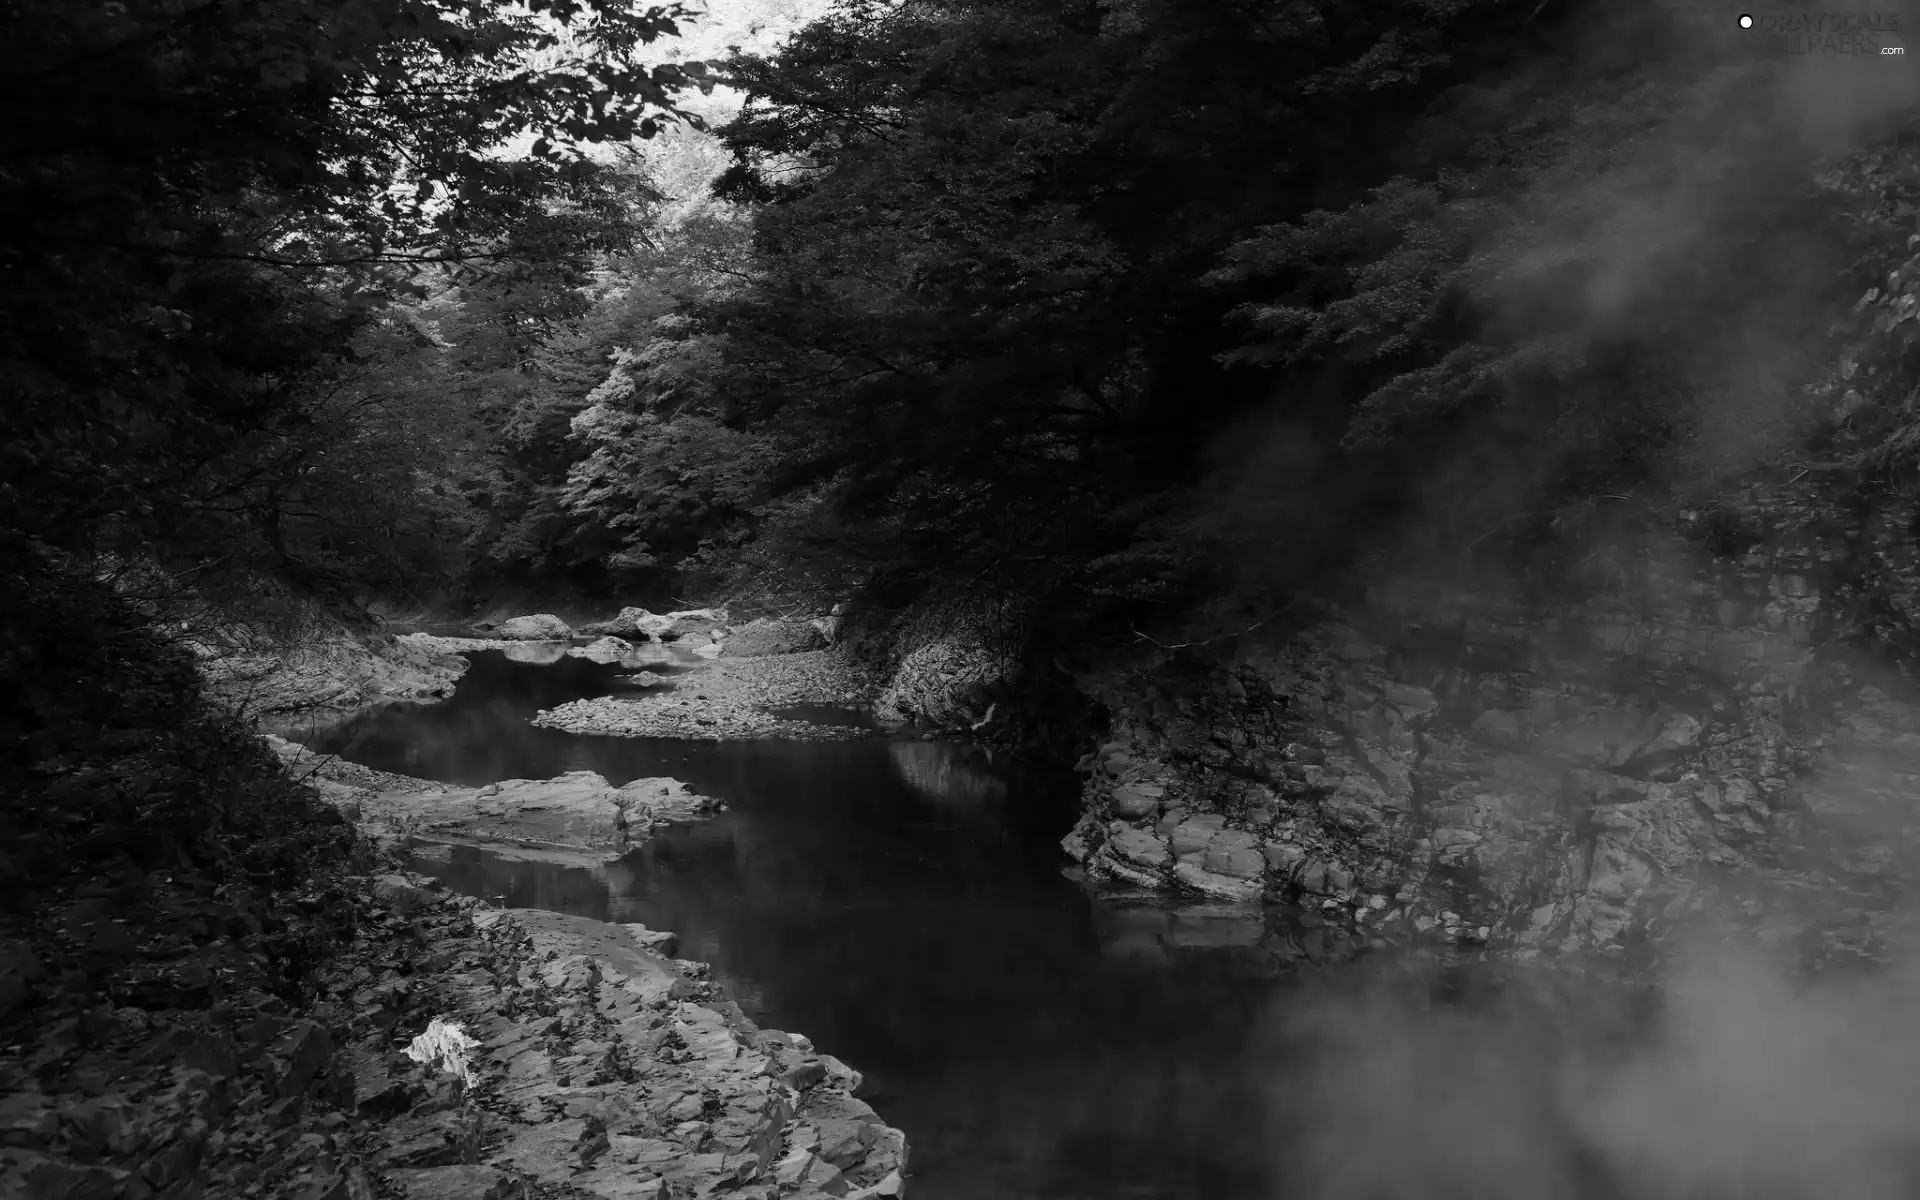 rocks, forest, Fog, autumn, Stones, River